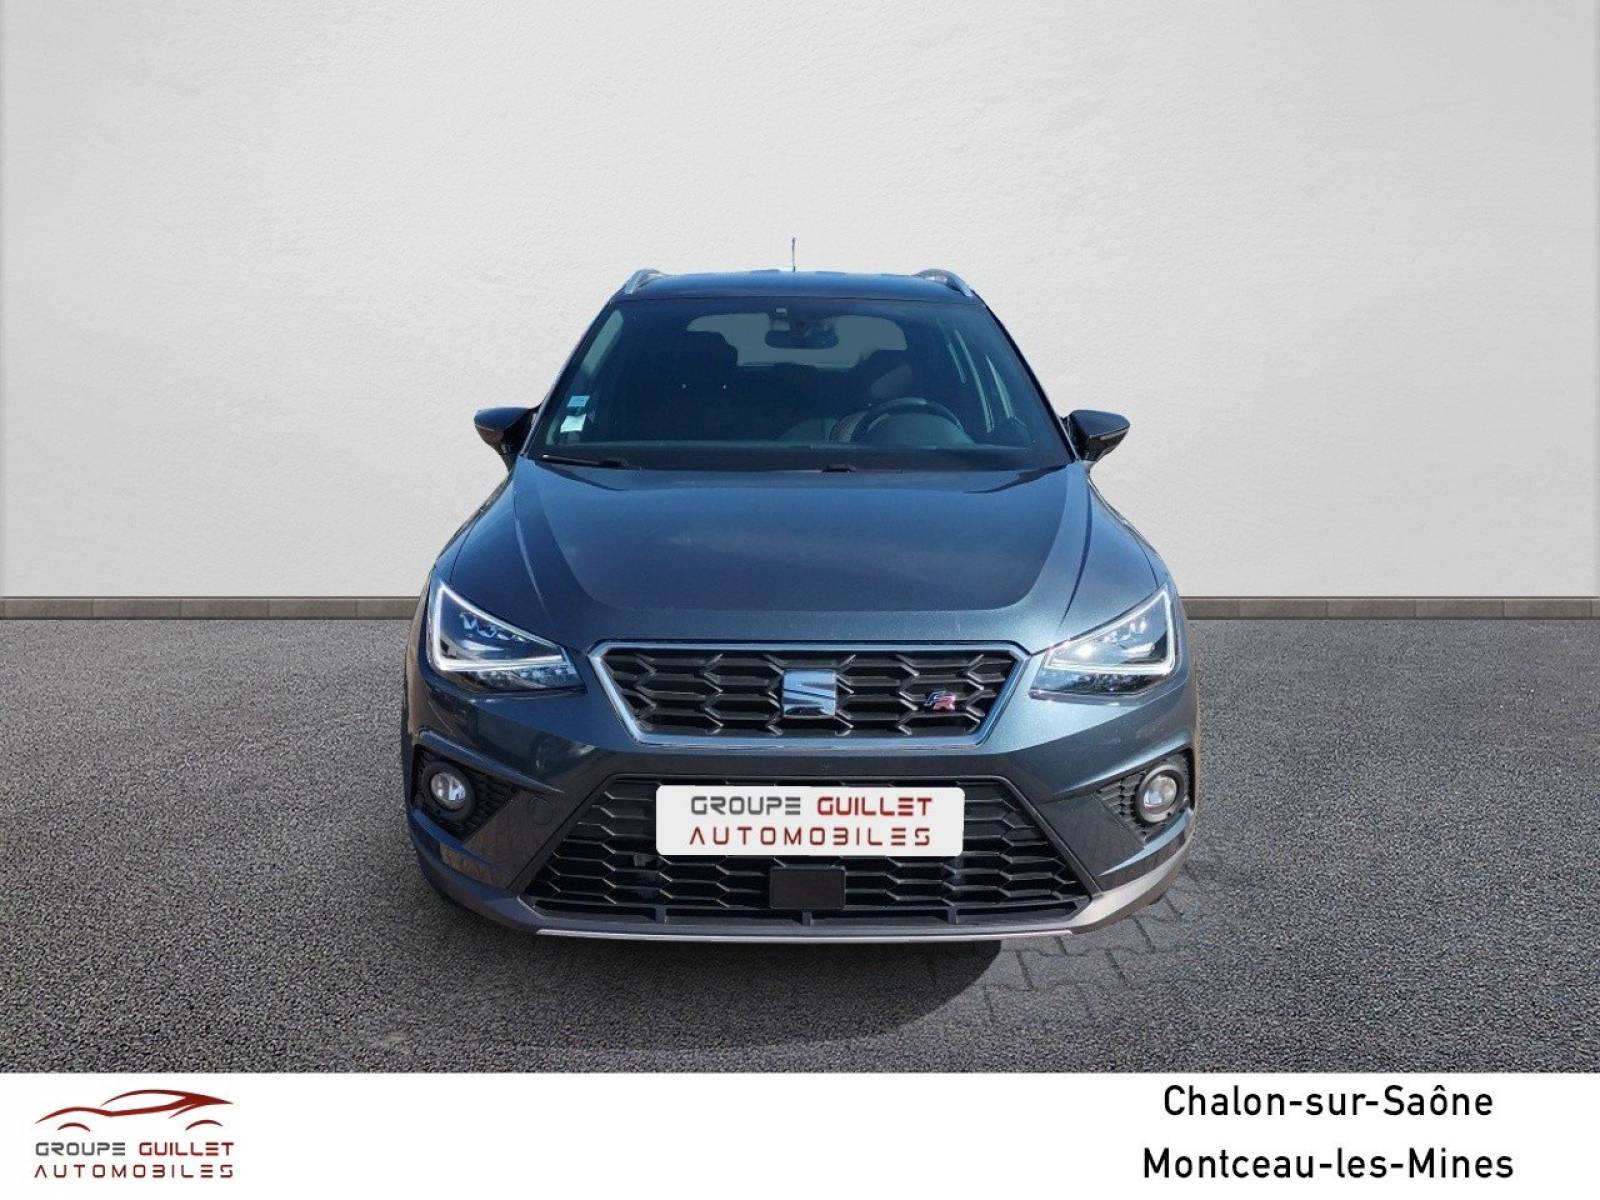 SEAT Arona 1.0 EcoTSI 115 ch Start/Stop BVM6 - véhicule d'occasion - Groupe Guillet - Chalon Automobile Mazda - Hyundai - Isuzu - 71100 - Chalon-sur-Saône - 2